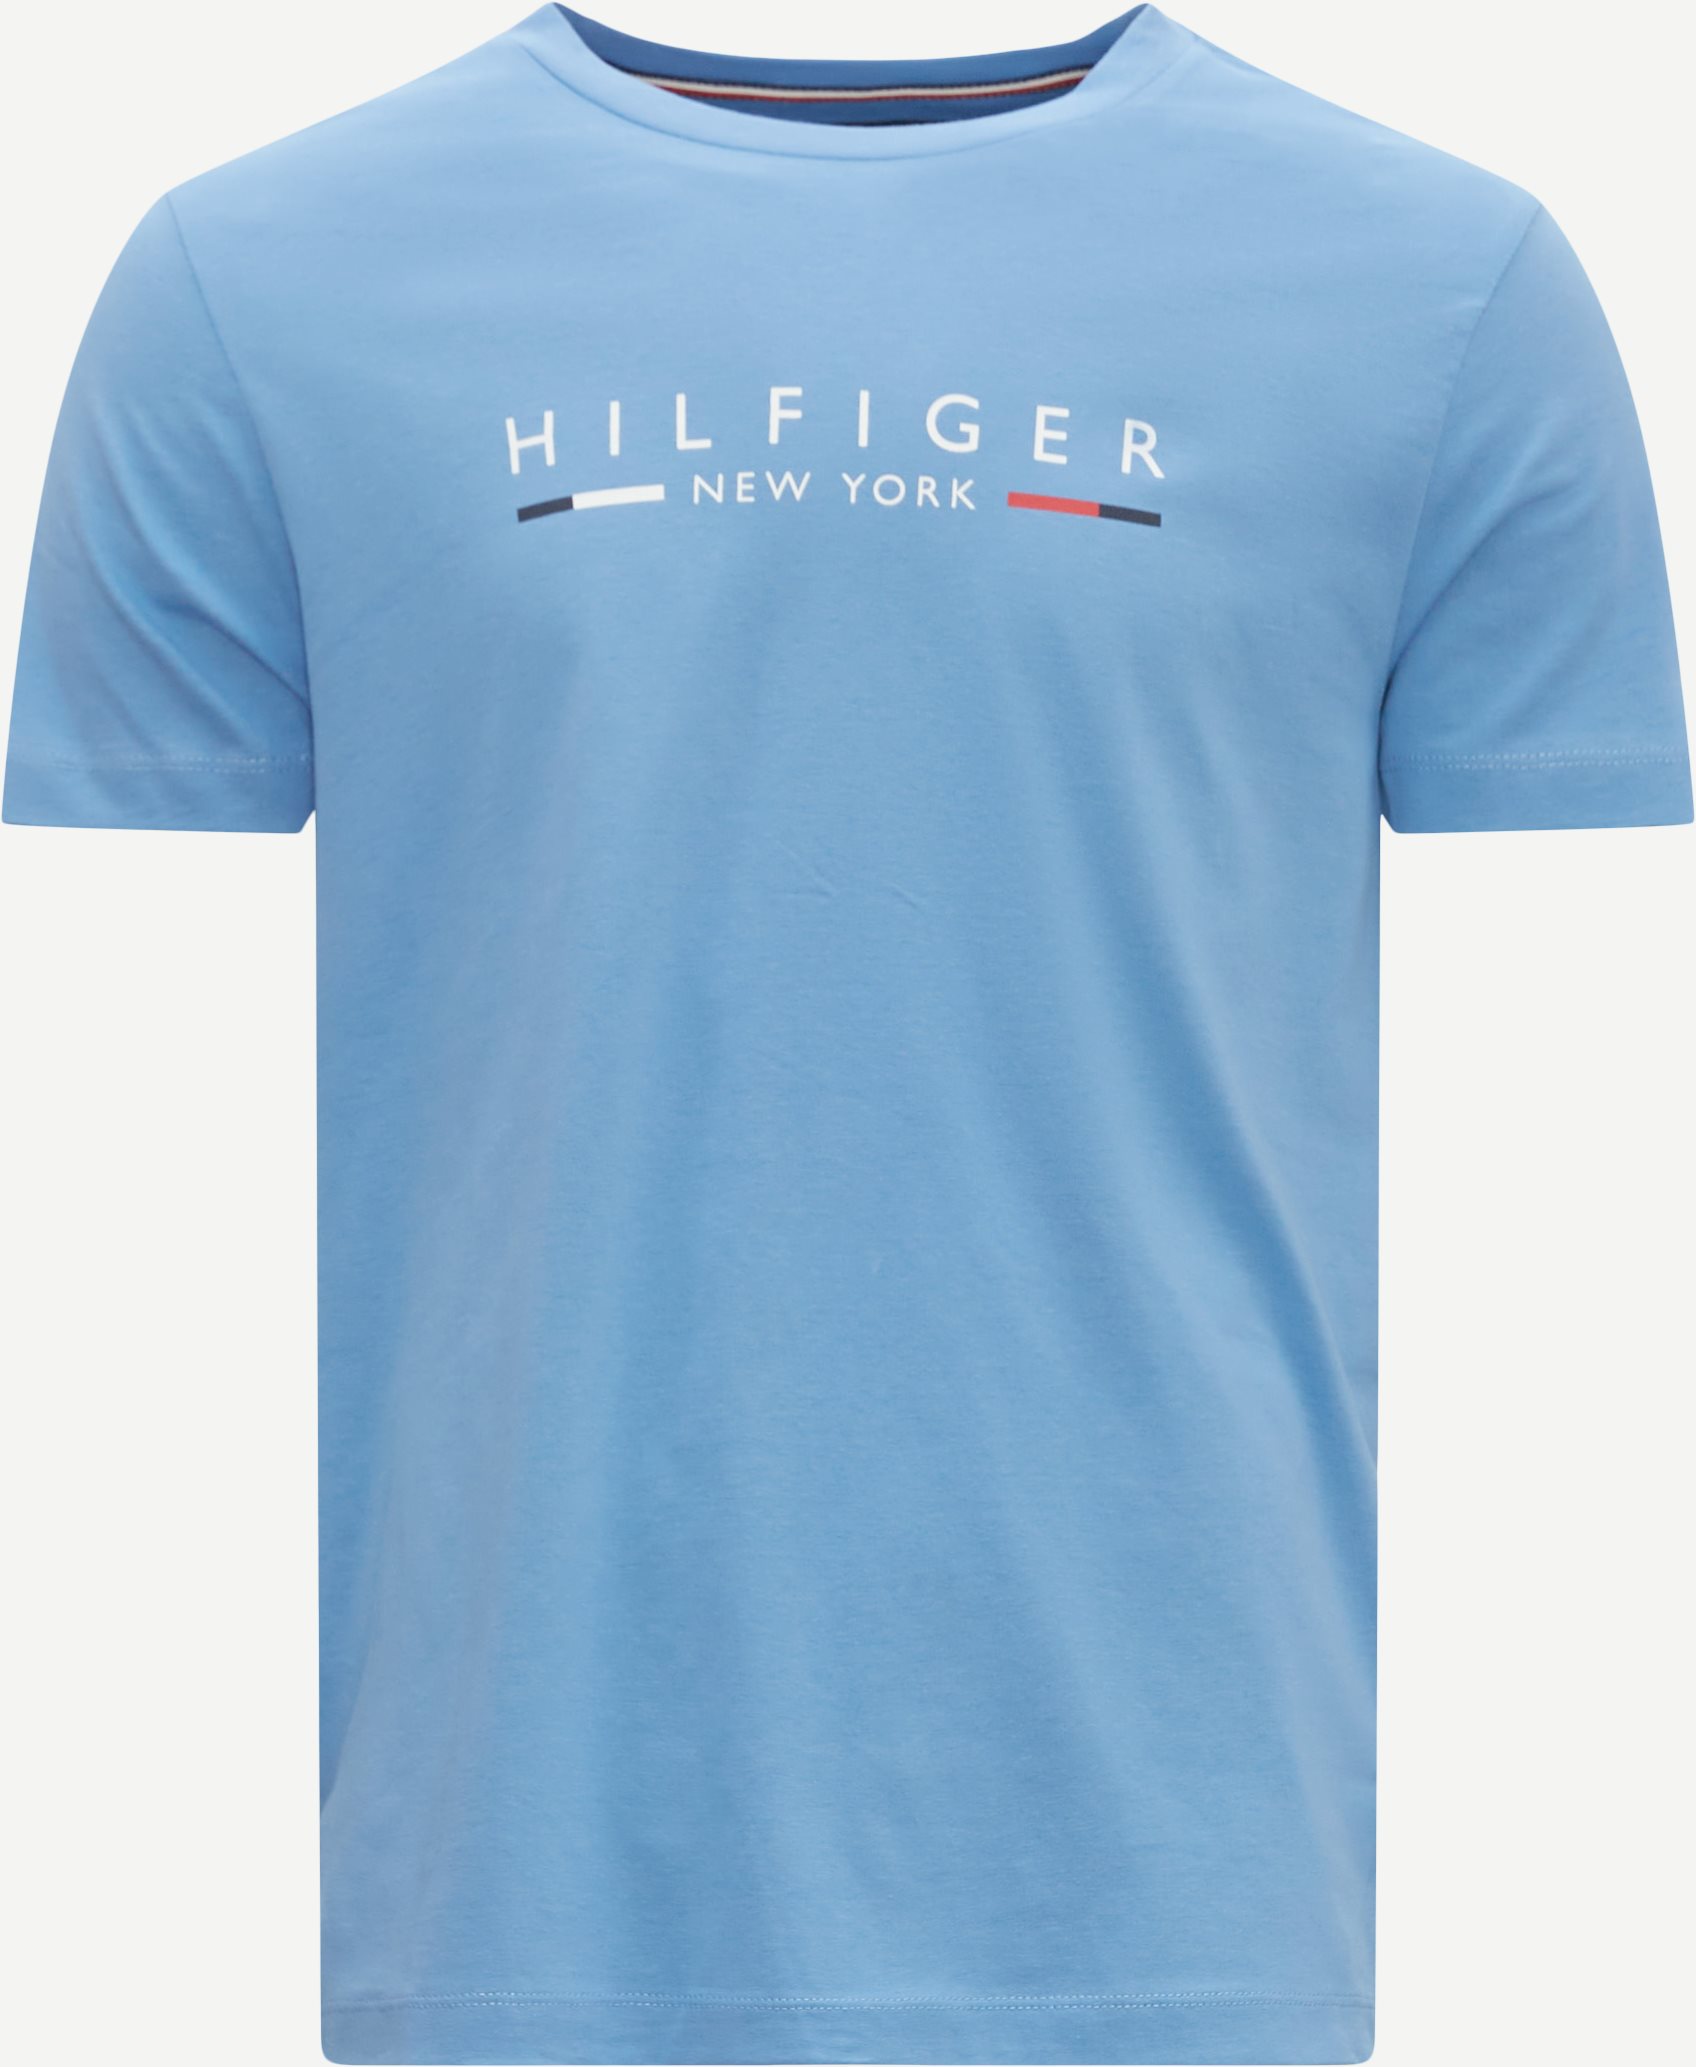 Tommy Hilfiger T-shirts 29372 HILFIGER NEW YORK TEE Blue